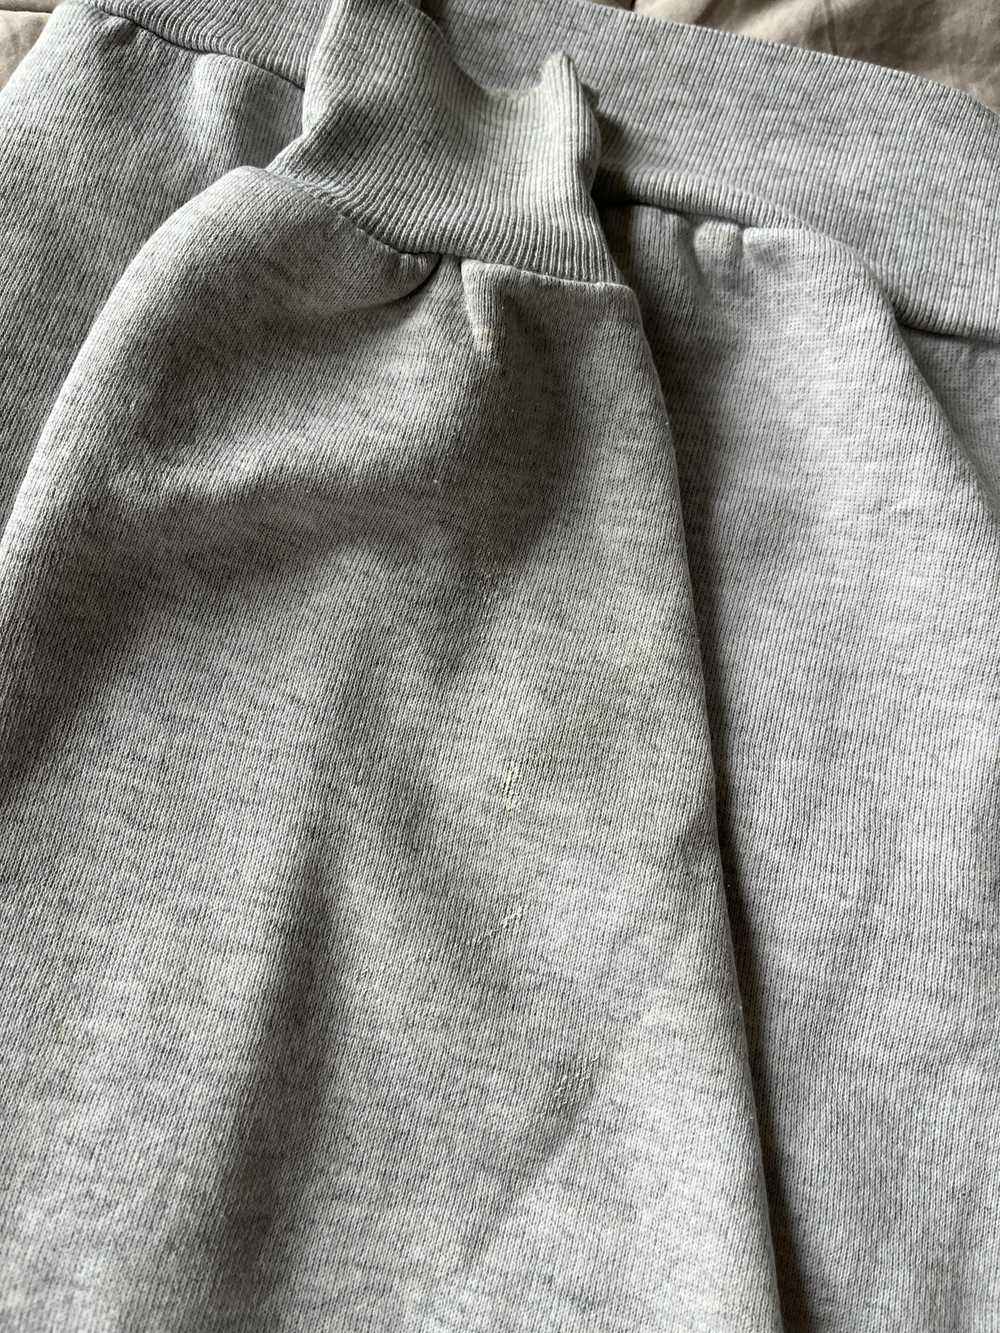 Vintage TDK Oneita Raglan Sweatshirt - image 5